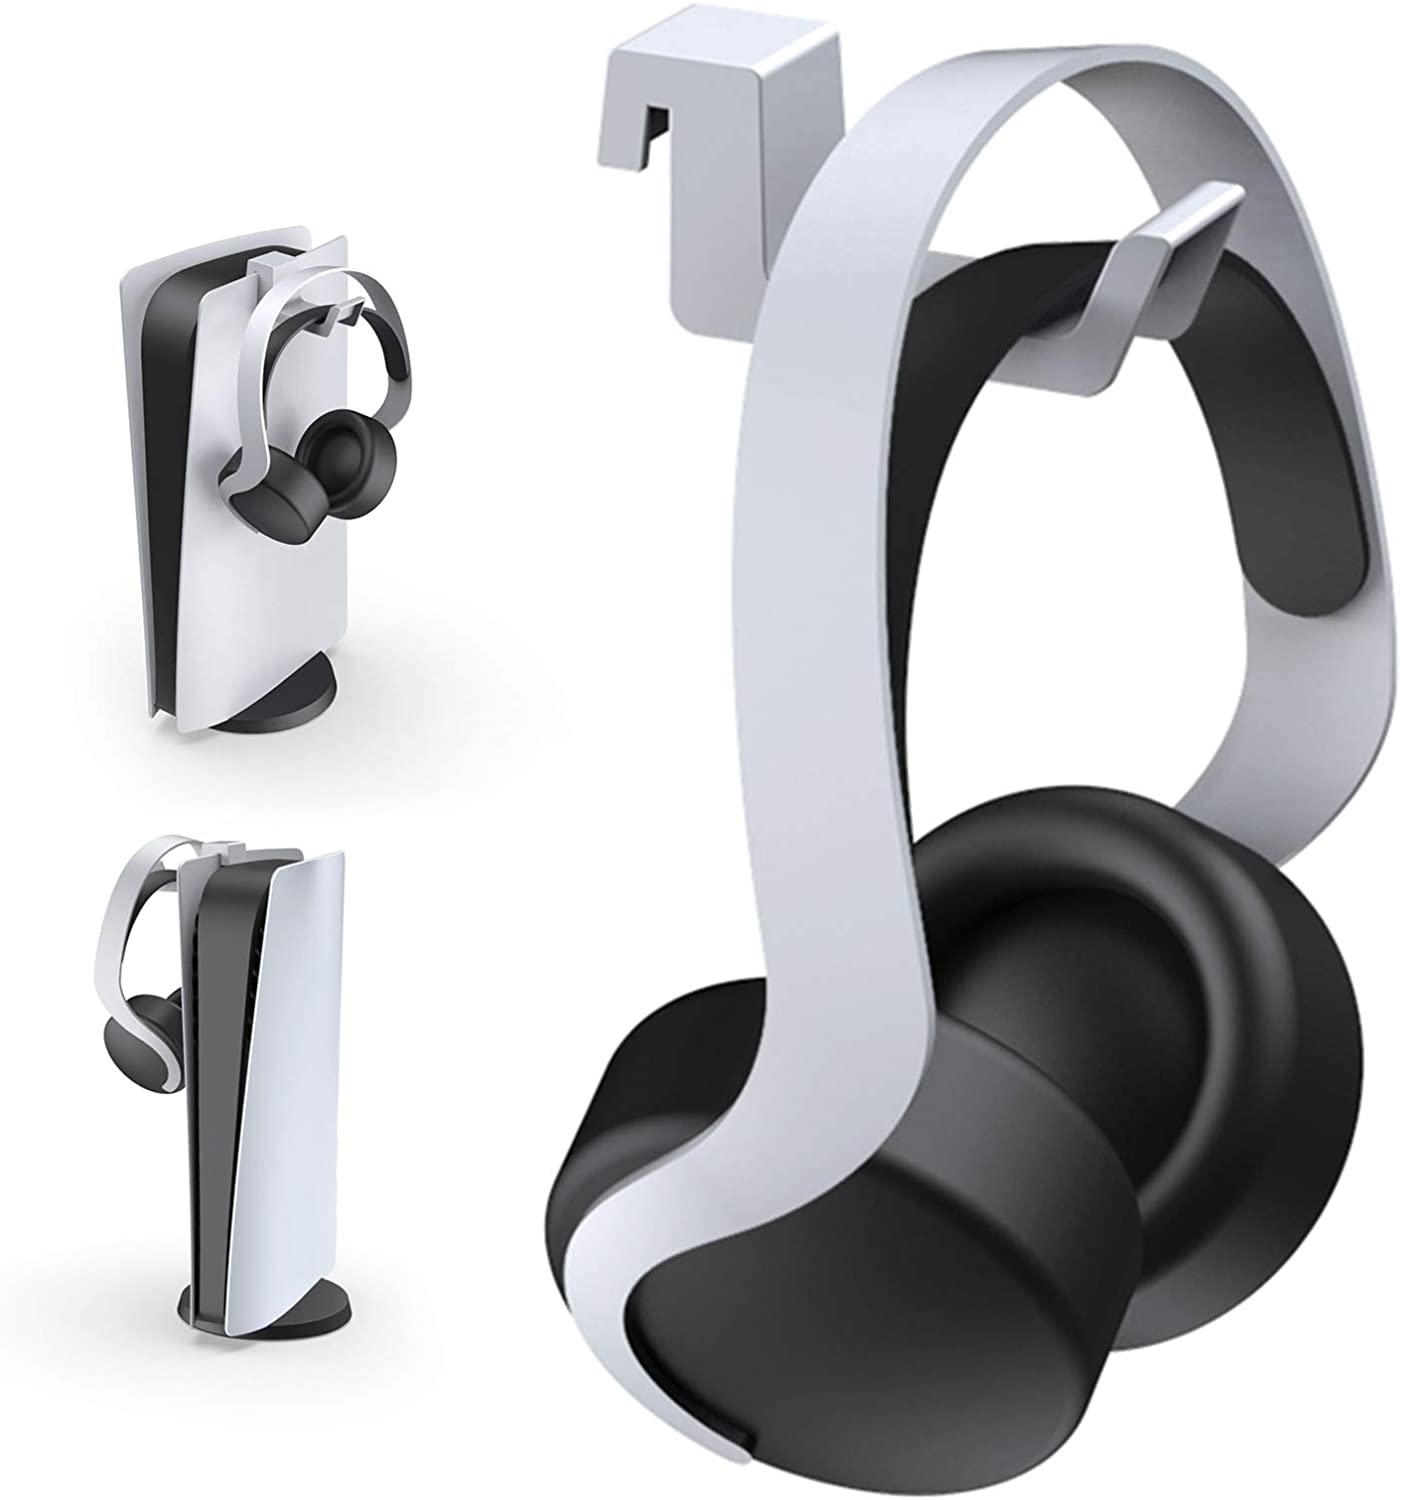 NexiGo PS5 Headphone Hanger (White)